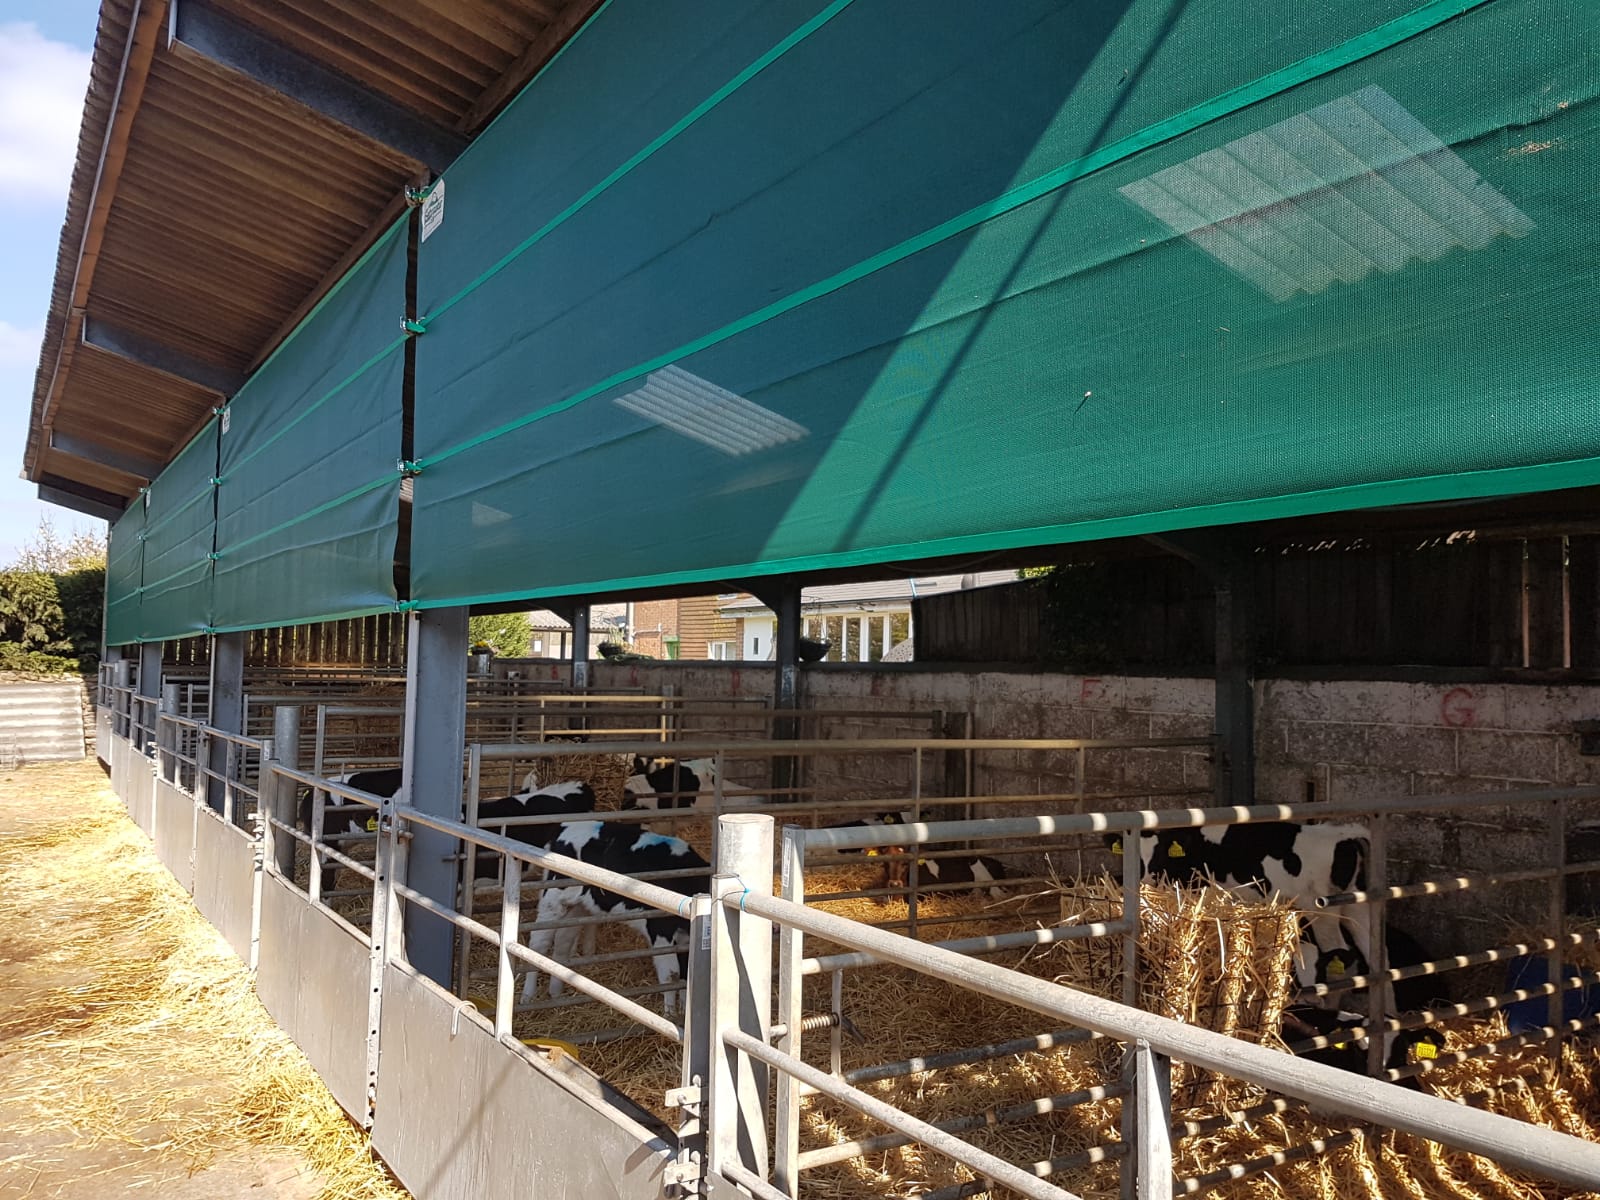 Calf sheds need good air flow